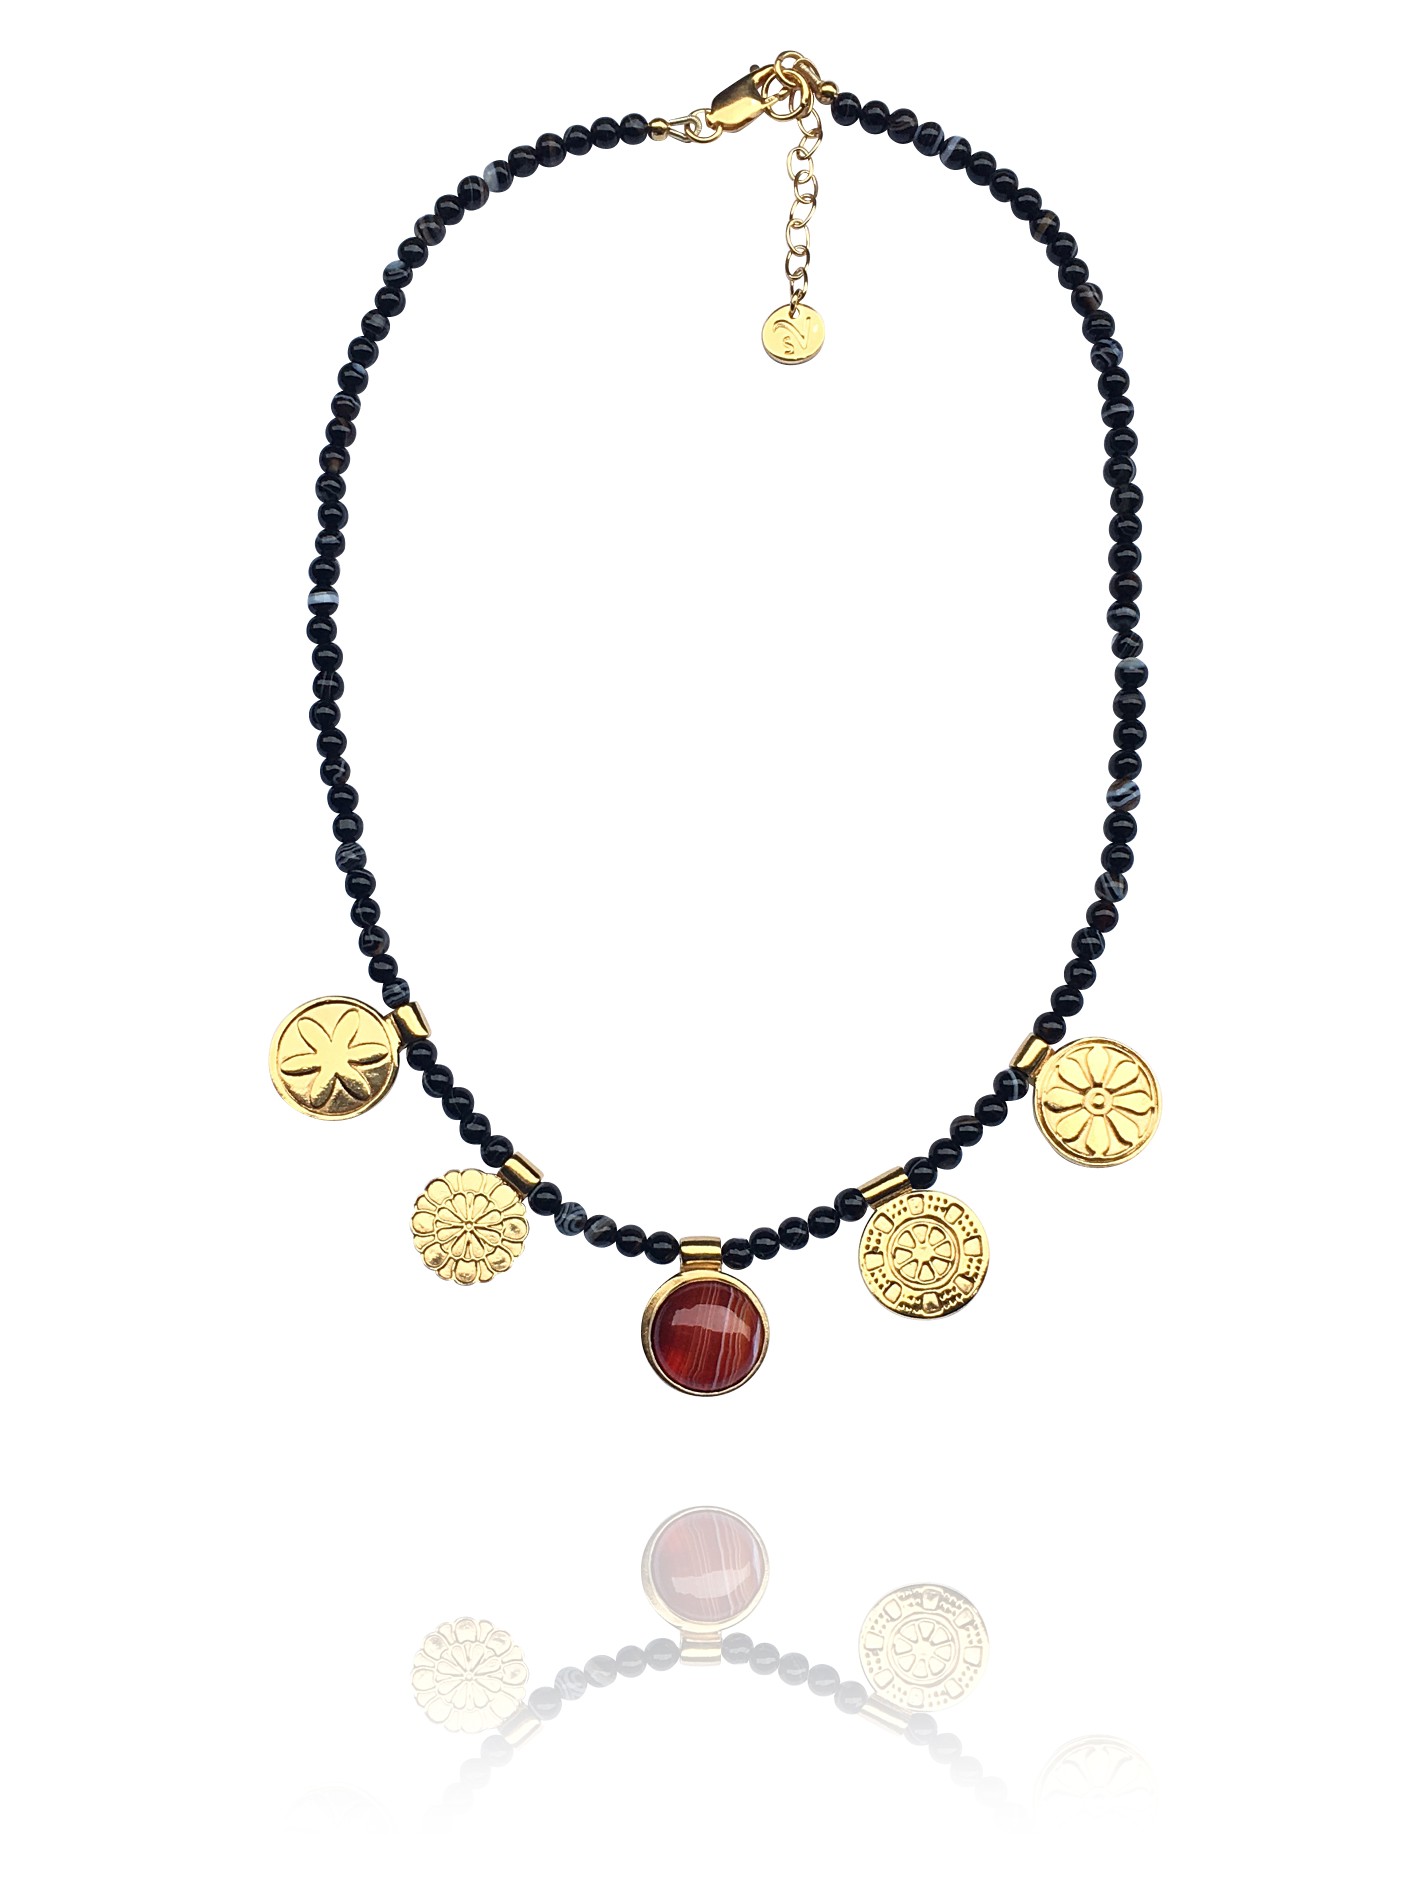 Assyrian Flowers necklace silver vermeil agate carnelian 87217 1